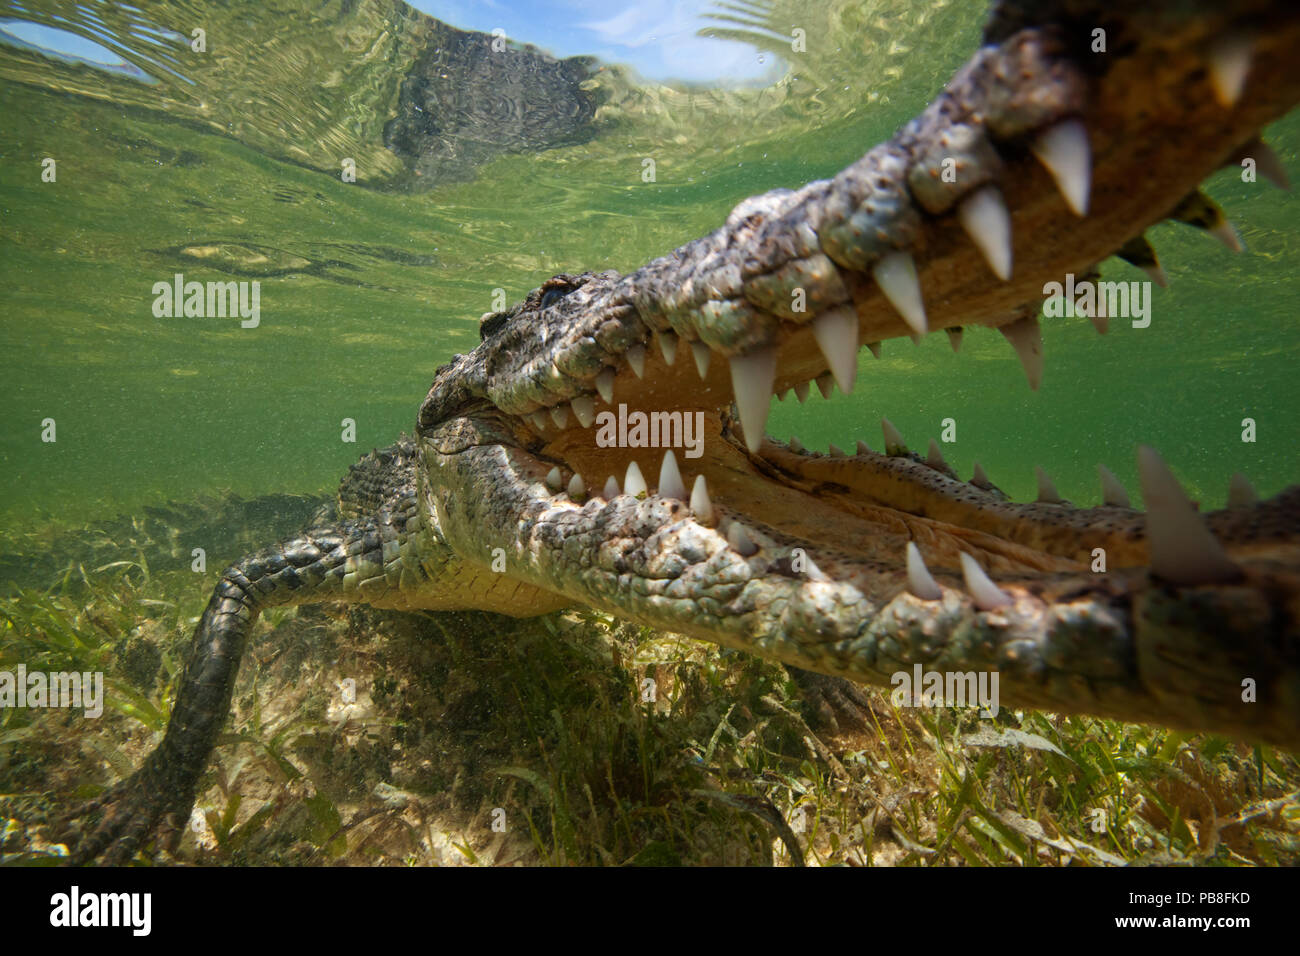 Spitzkrokodil (Crocodylus acutus) extreme Nahaufnahme mit Backen zu öffnen, Banco Chinchorro Biosphärenreservat, Karibik, Mexiko Stockfoto